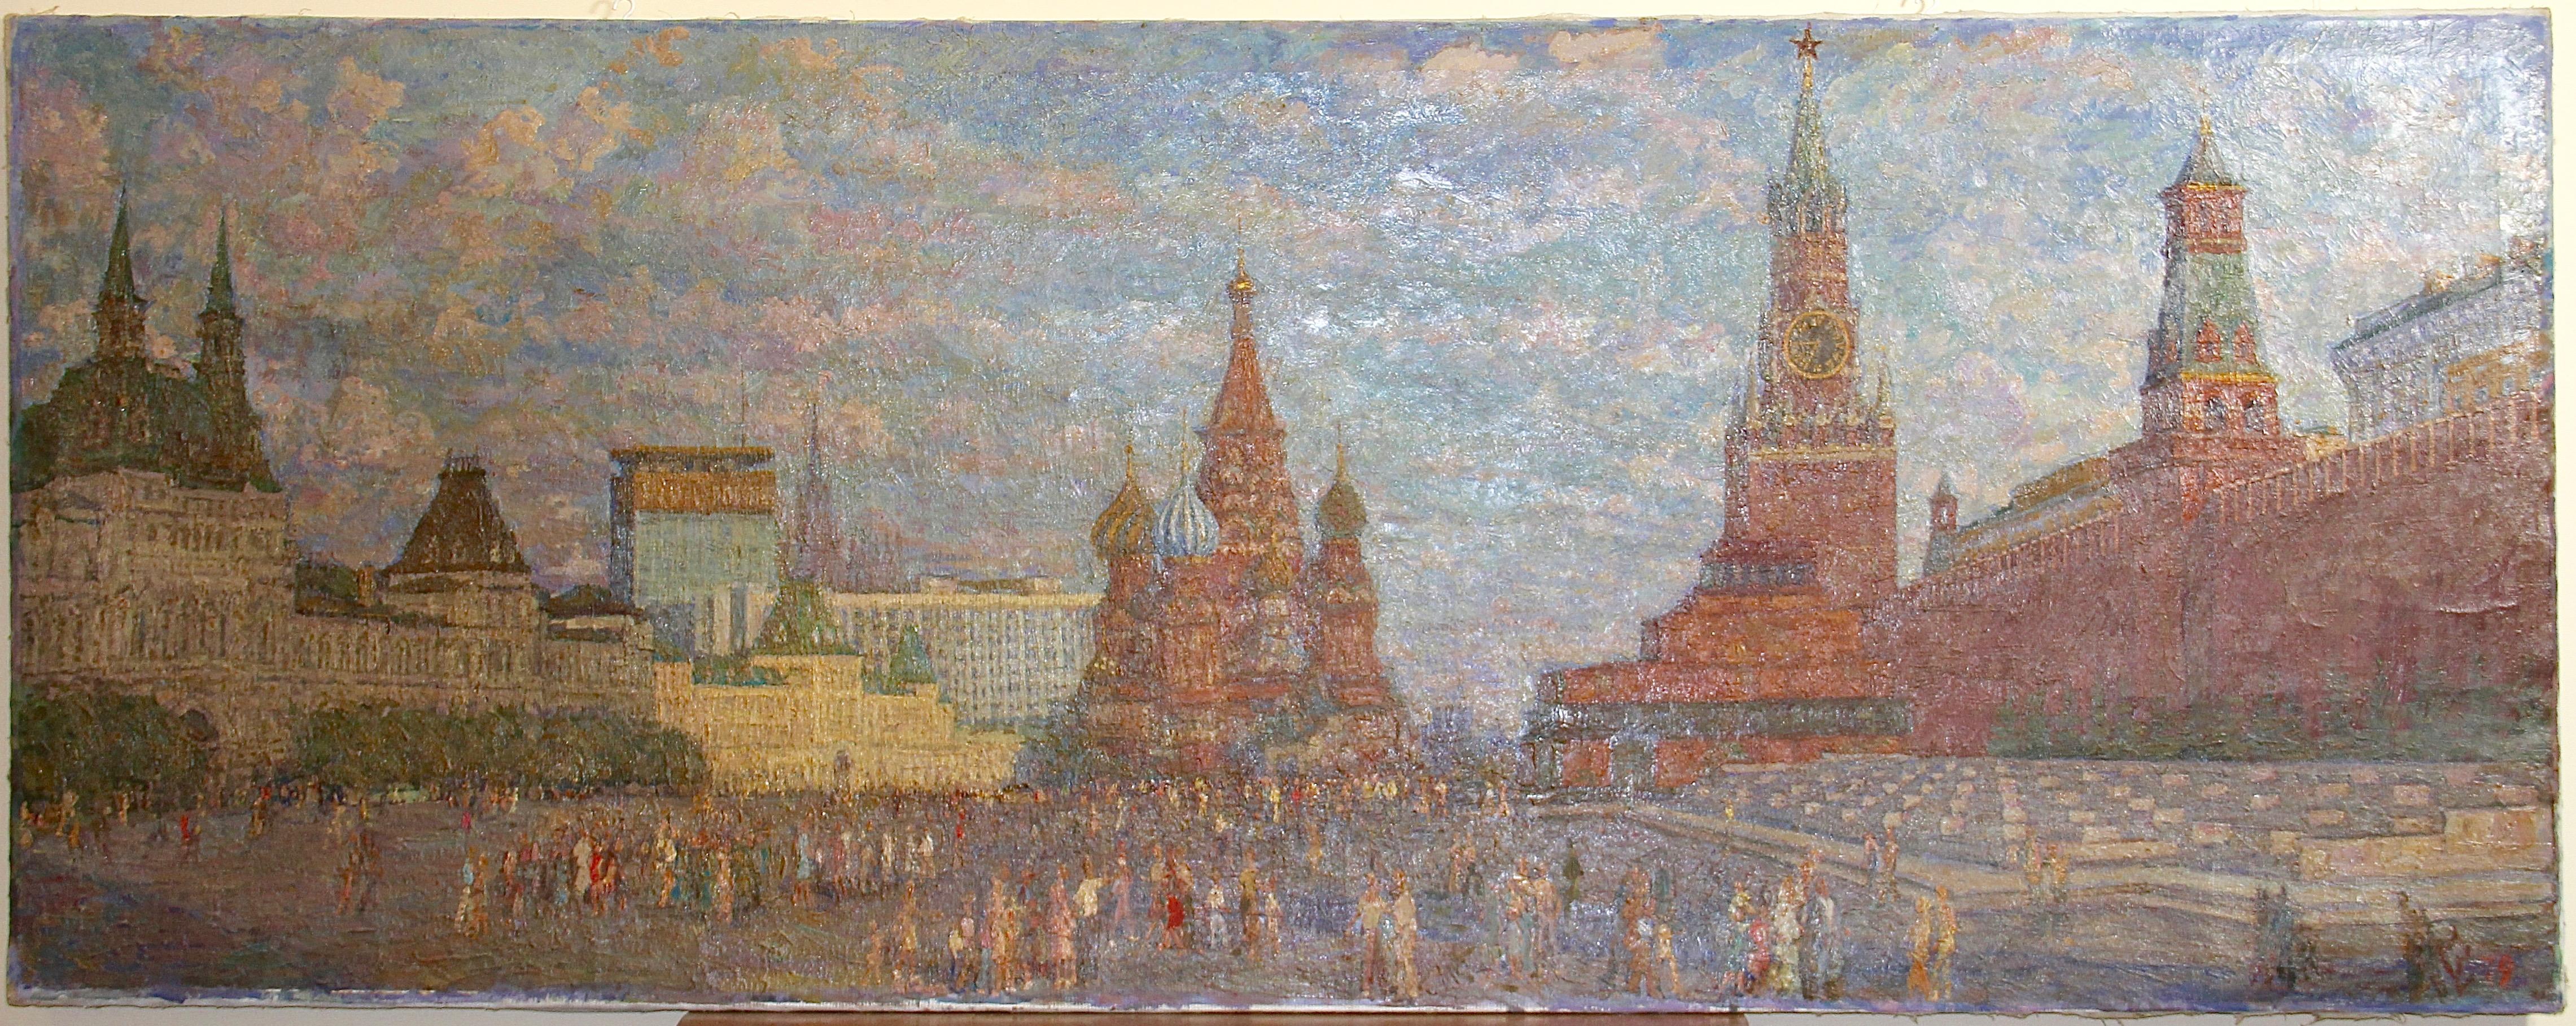 On the Red Square, Kremlin, Moscou - Peinture réaliste, paysage, 20e siècle - Painting de Solovykh Gennady Ivanovich